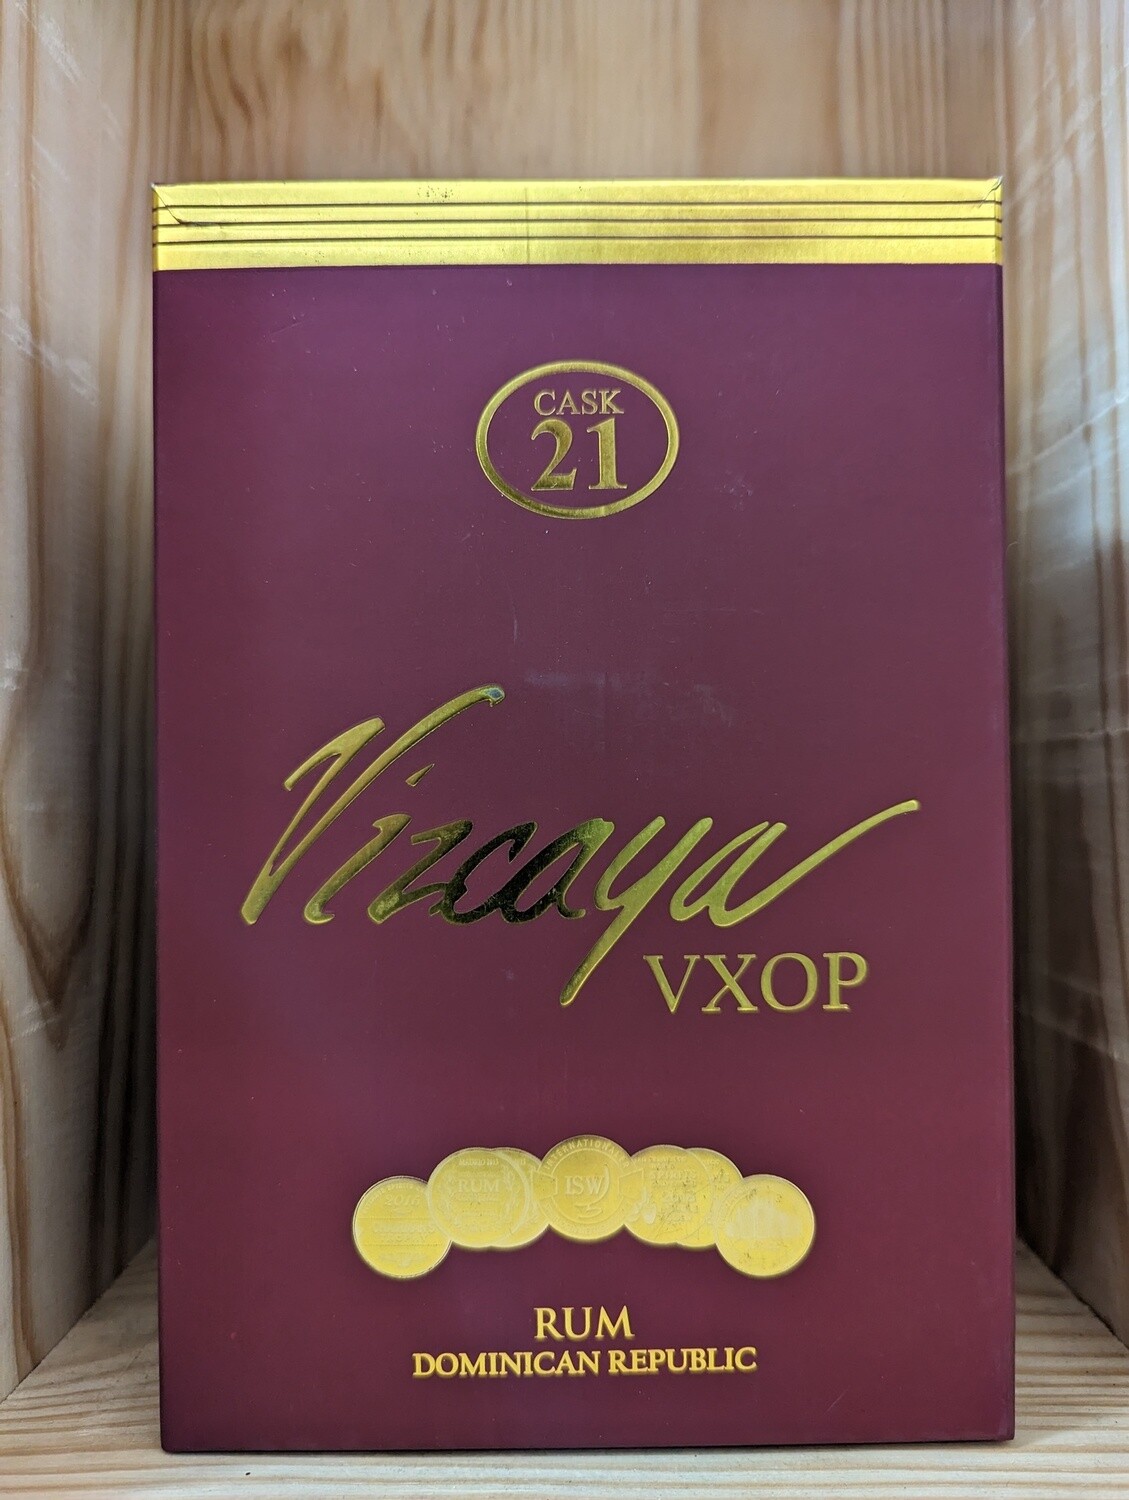 VIZCAYA VXOP CASK 21 RUM REGULARLY $49.99